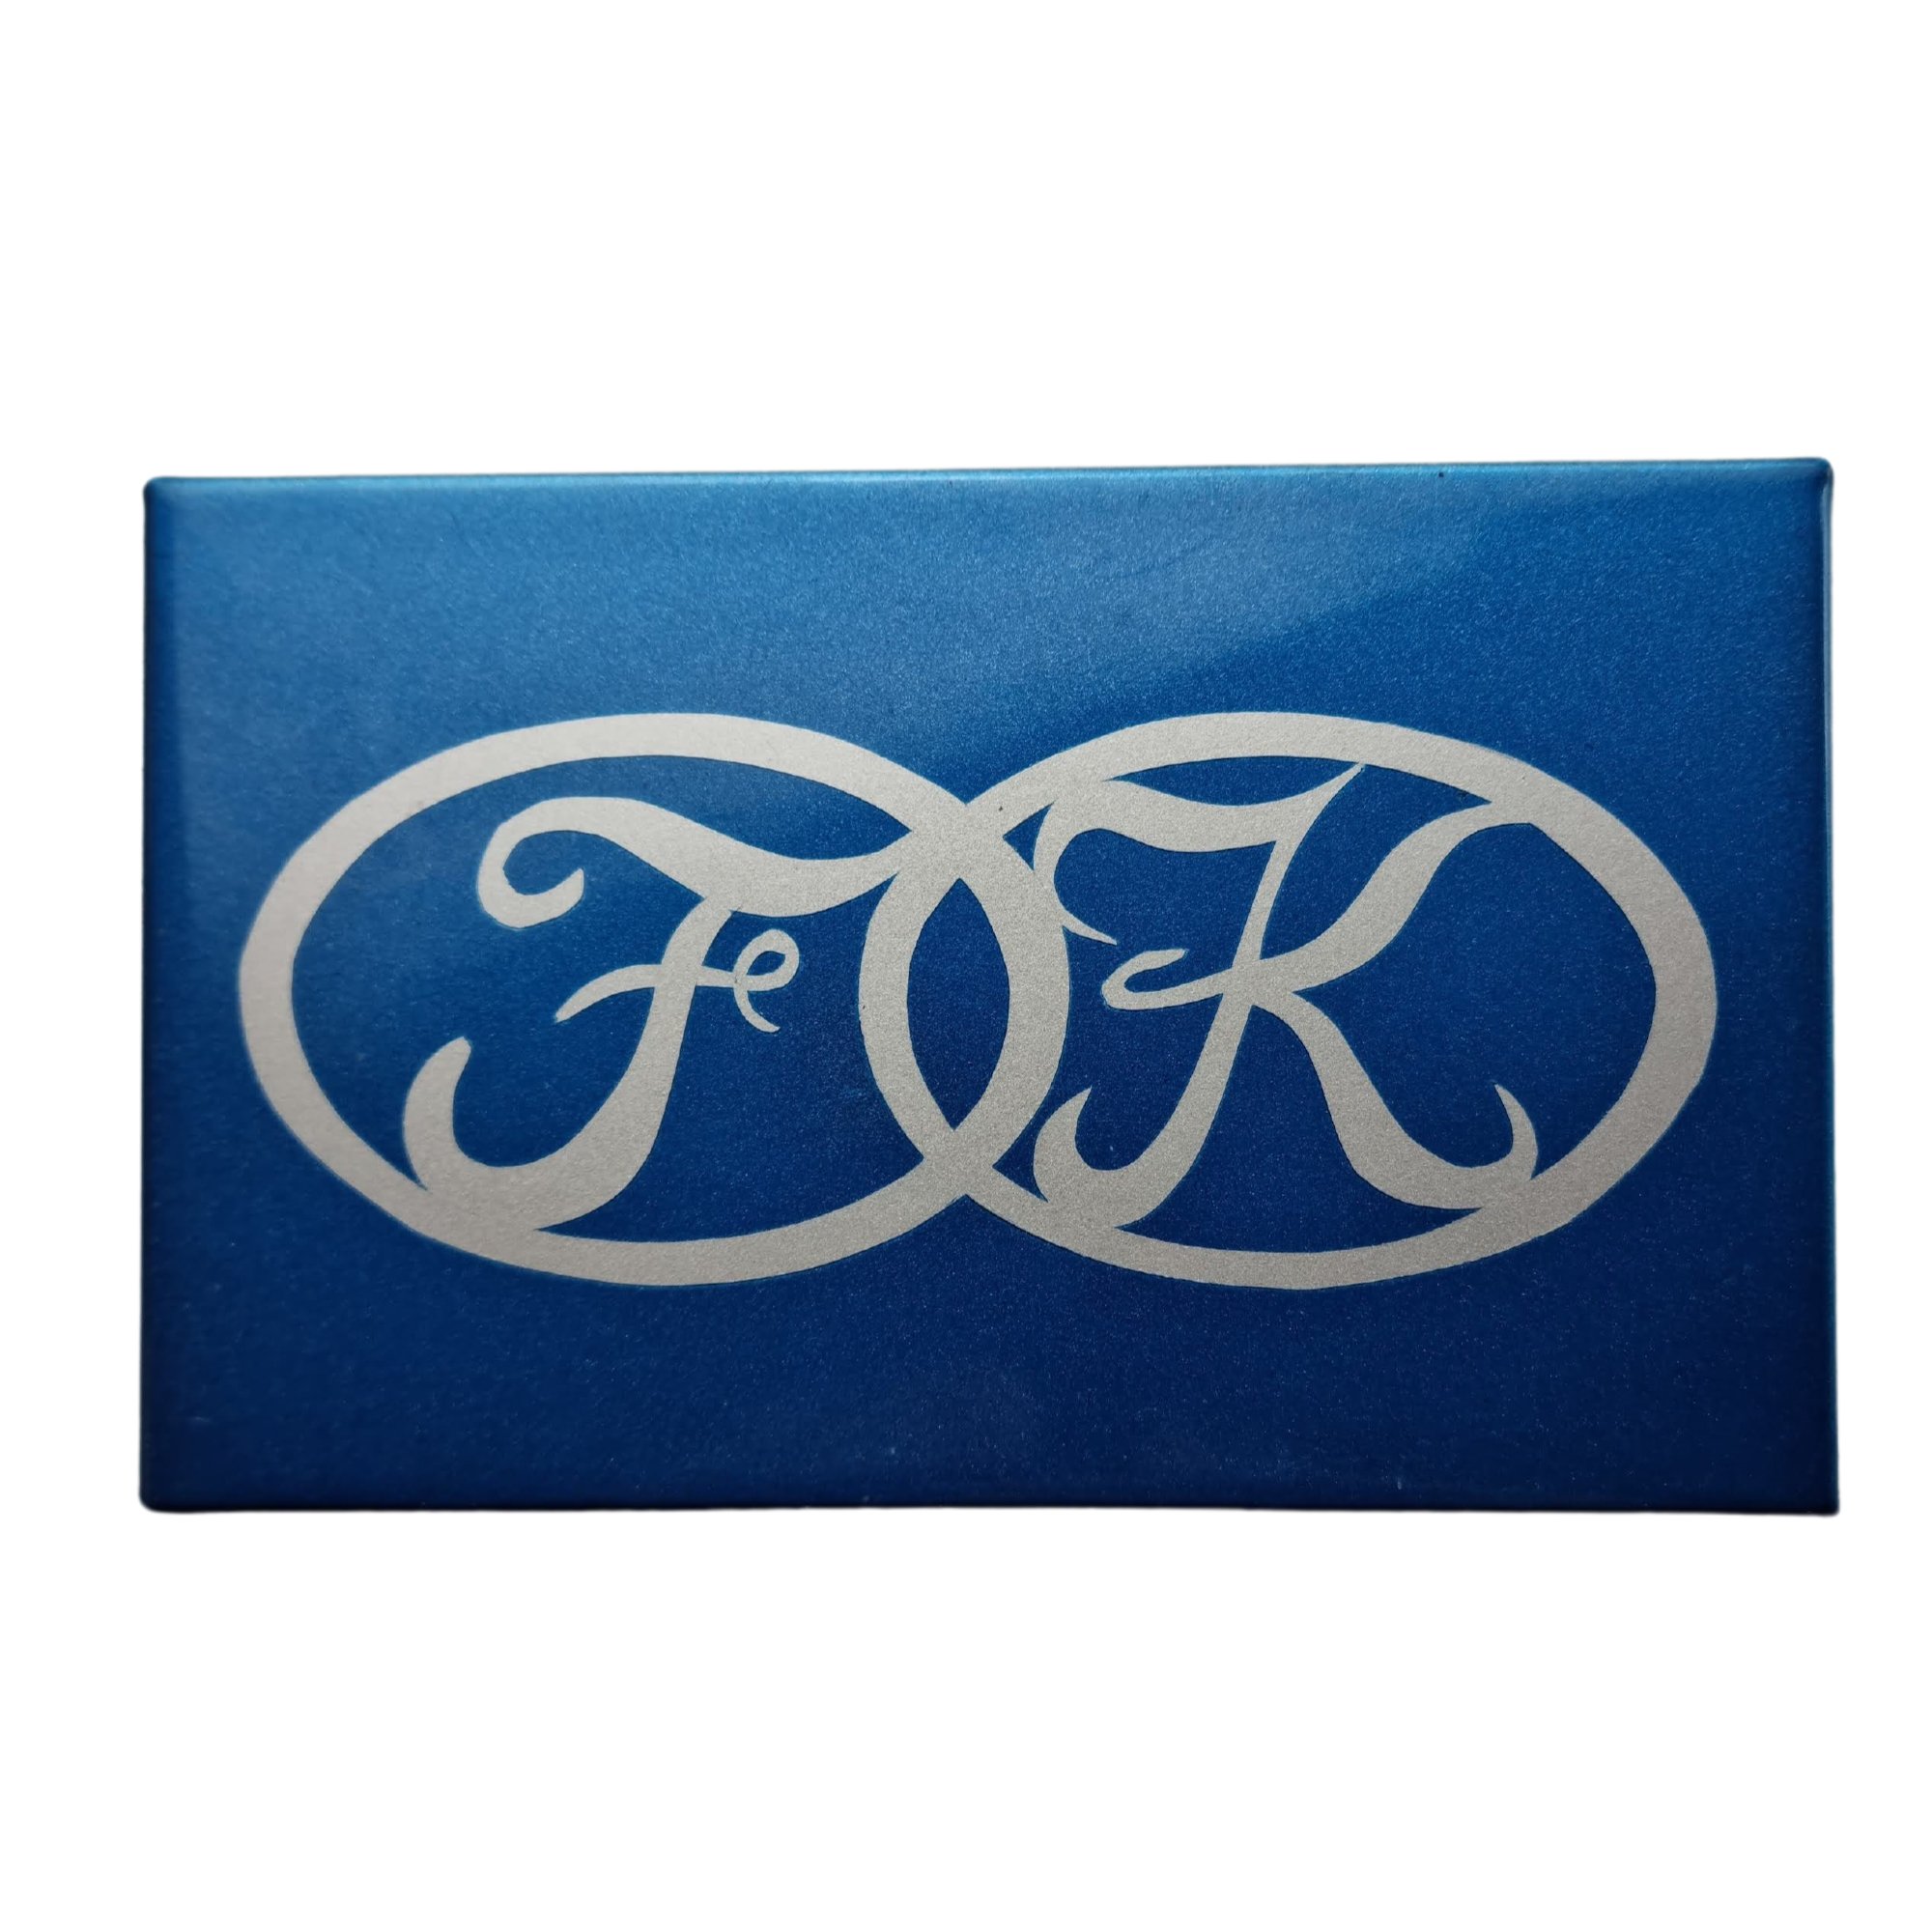 Ford-Köln-Emblem (Deutsches Straßenmuseum e.V. CC BY-NC-SA)